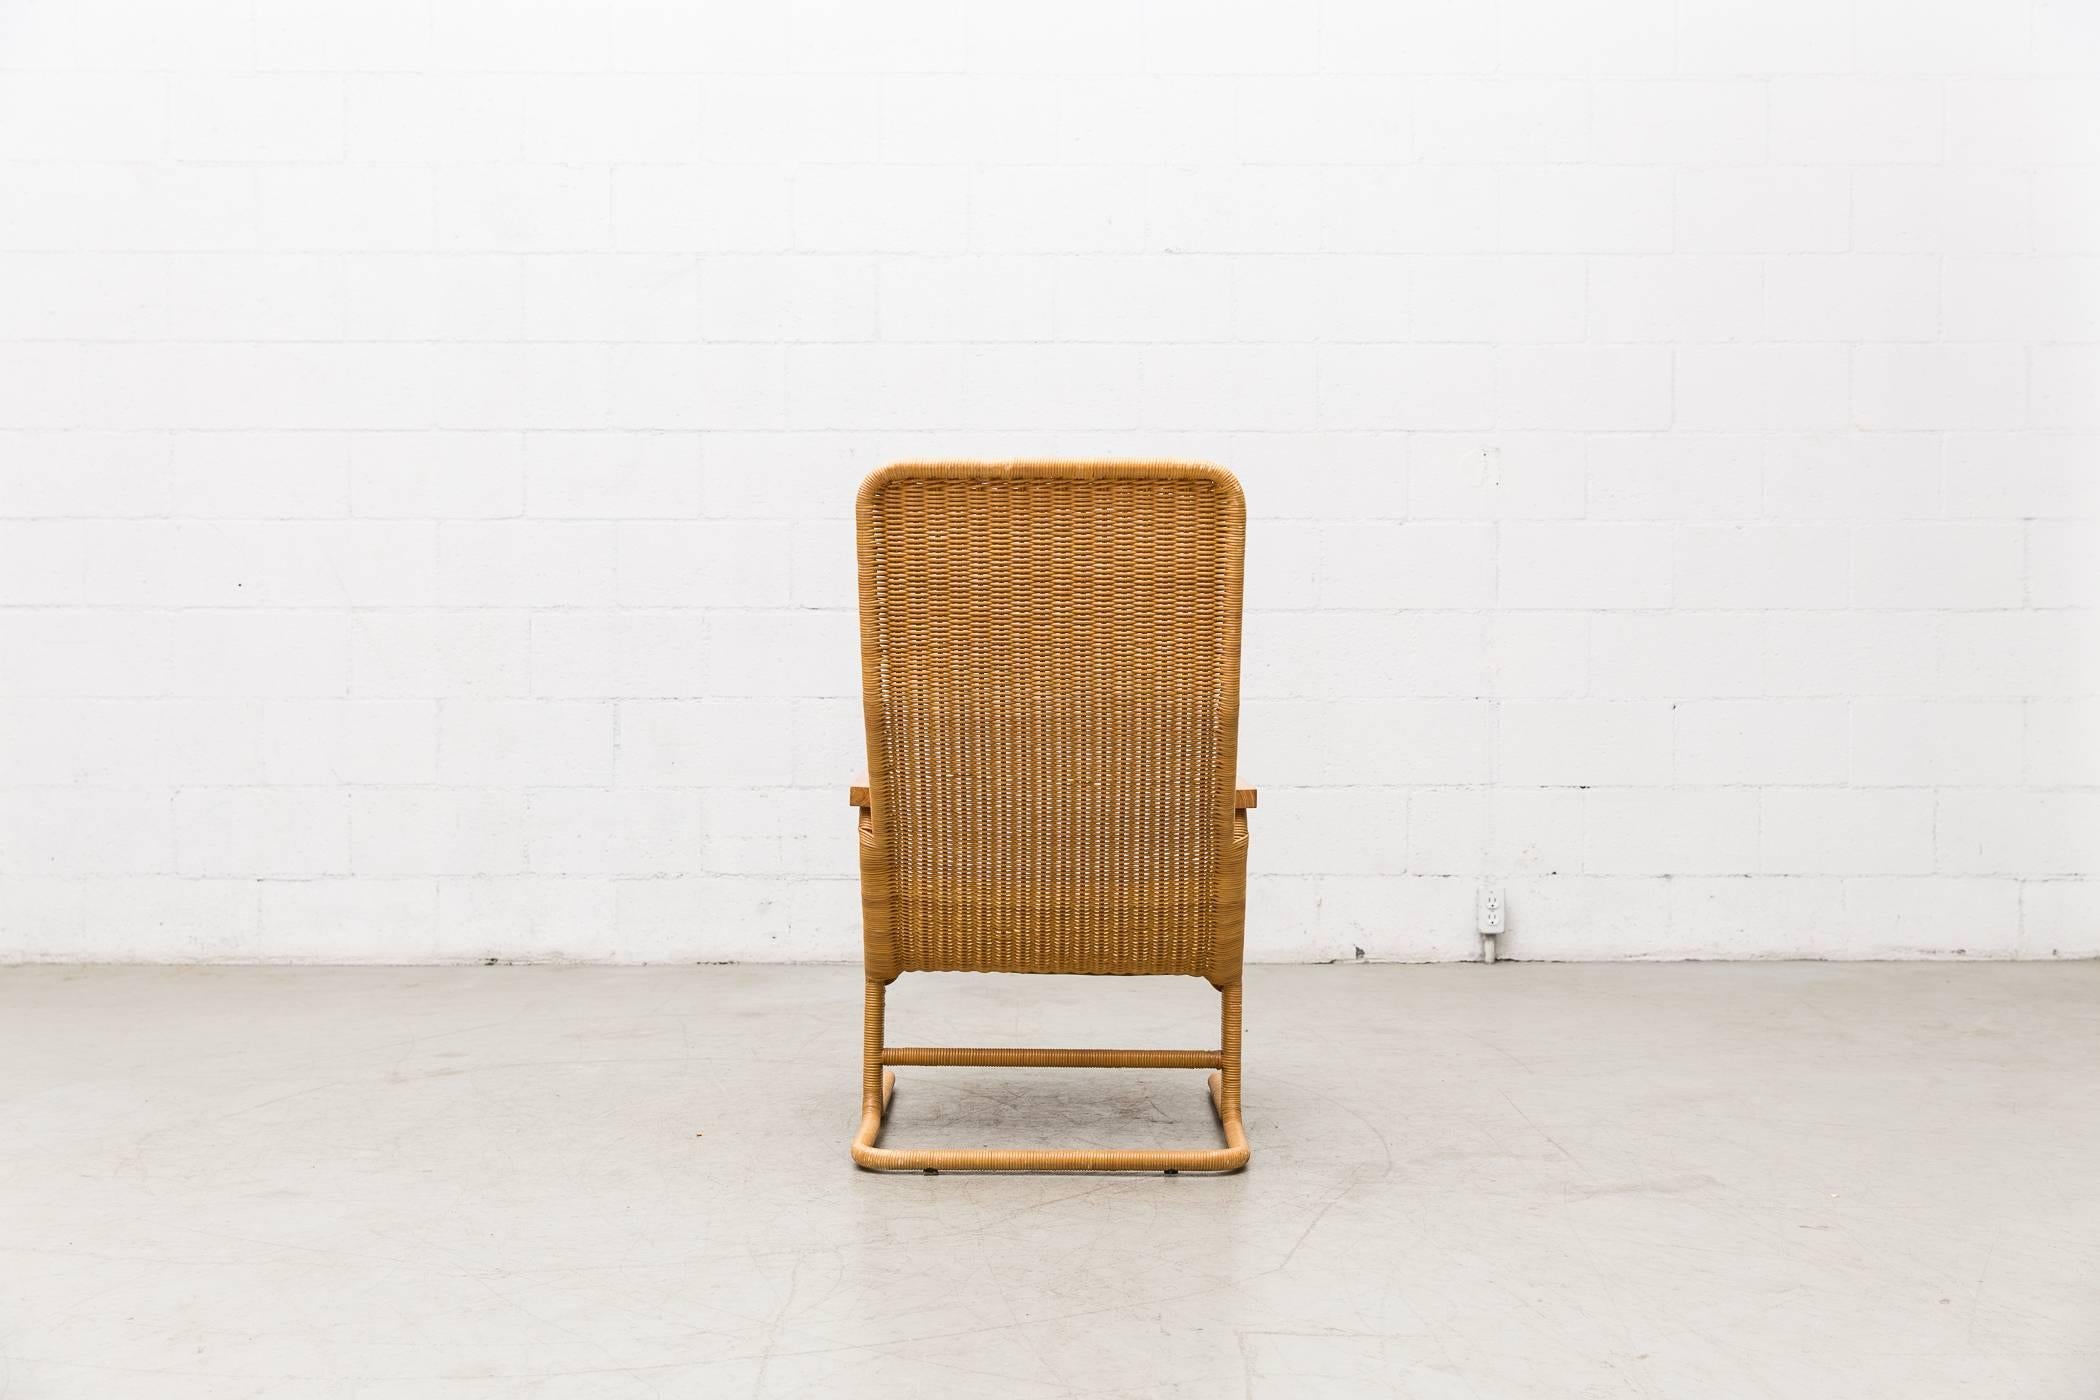 Woven Dirk Van Sliedregt Rattan Lounge Chair with Wood Arms